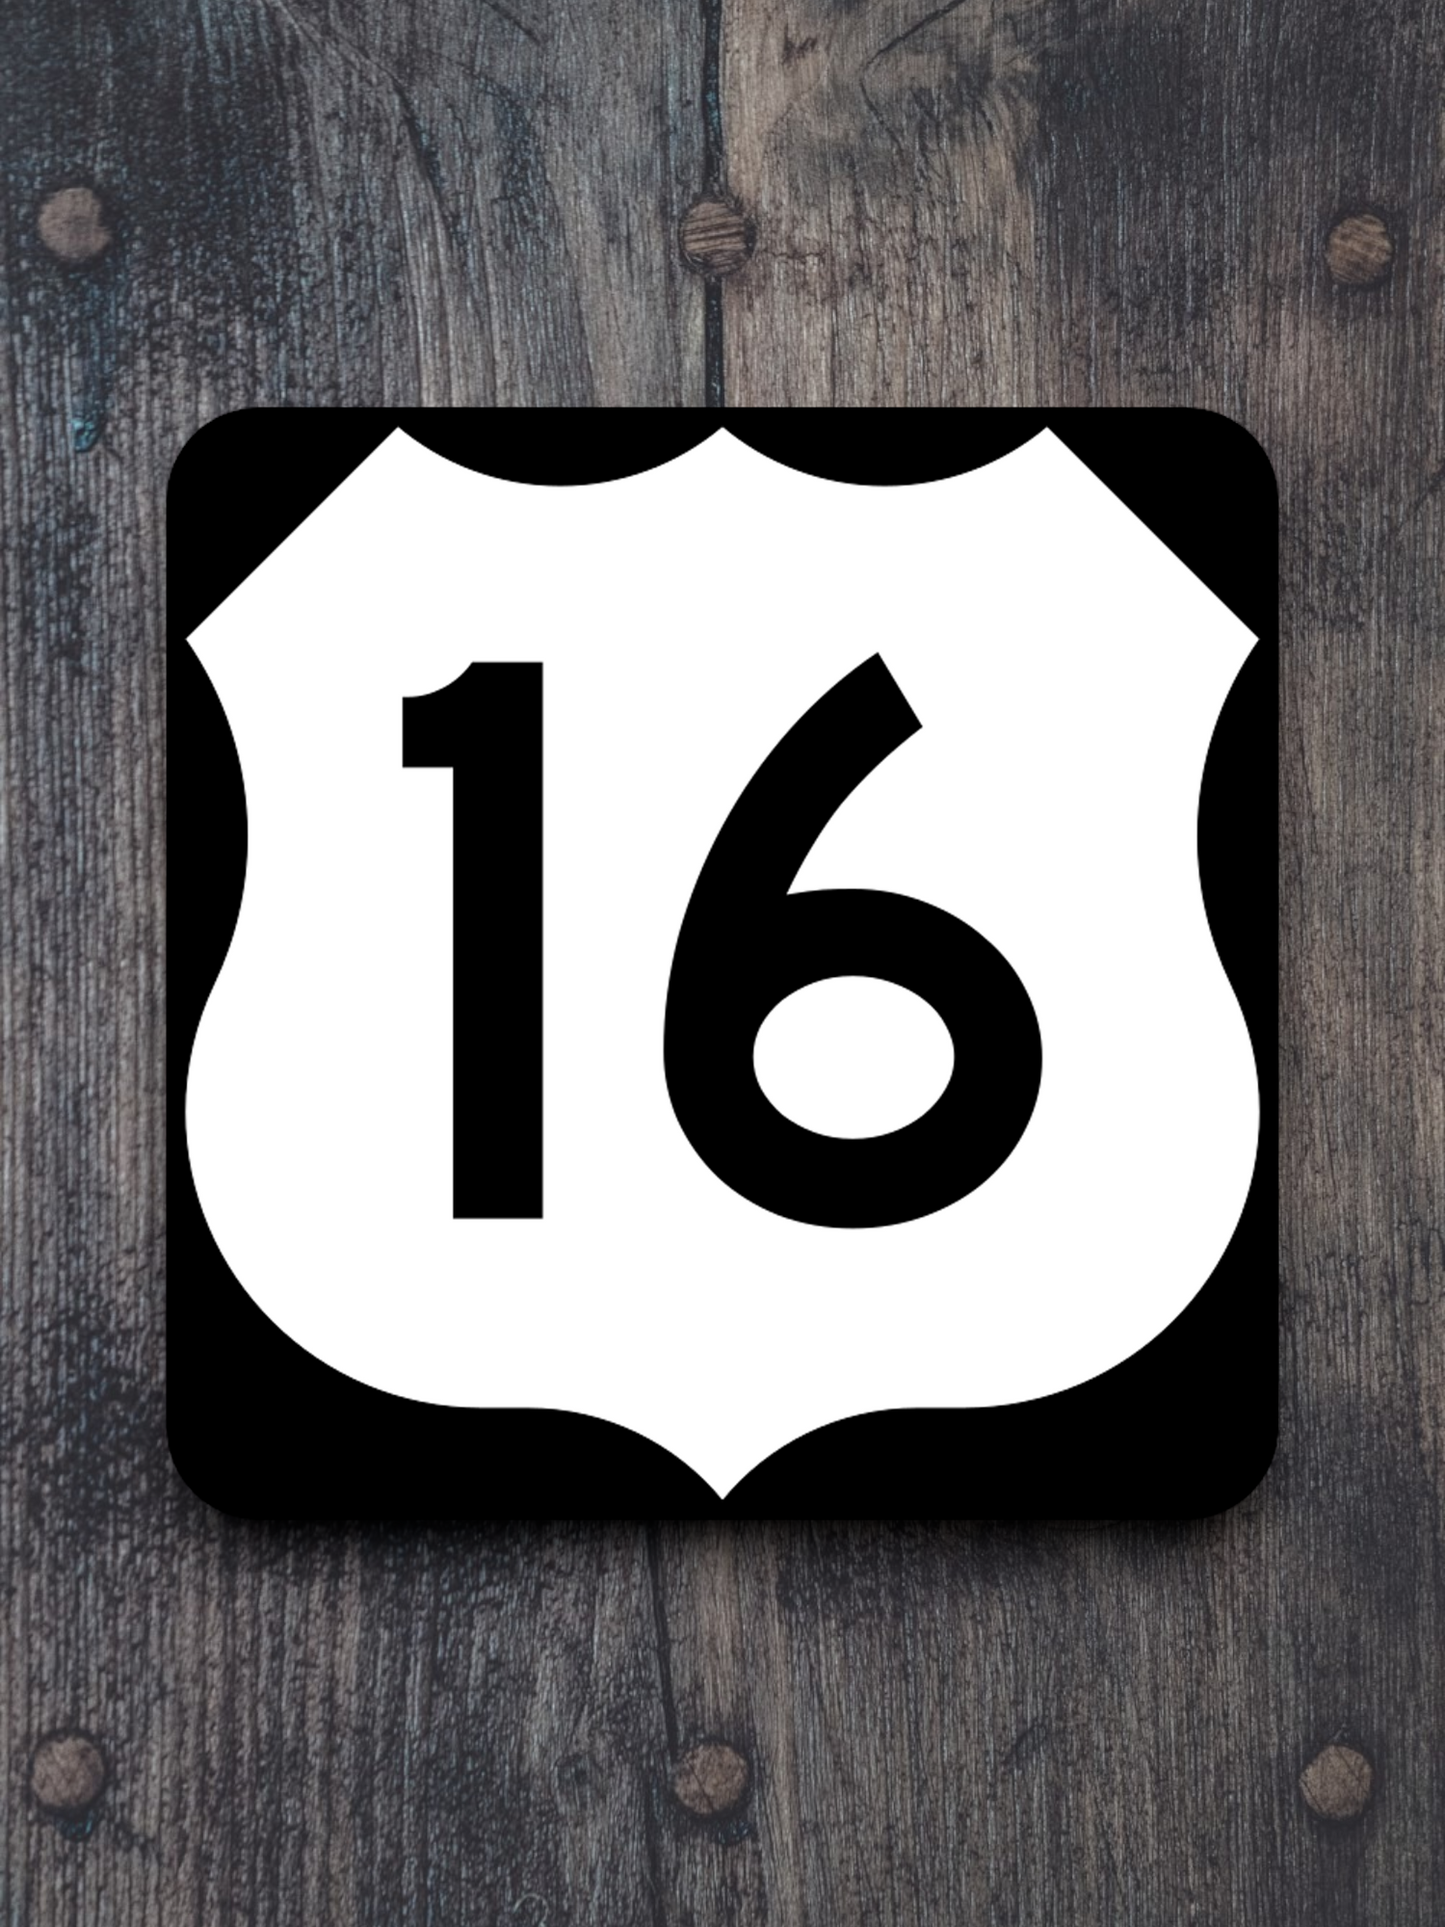 U.S. Route 16 Road Sign Sticker